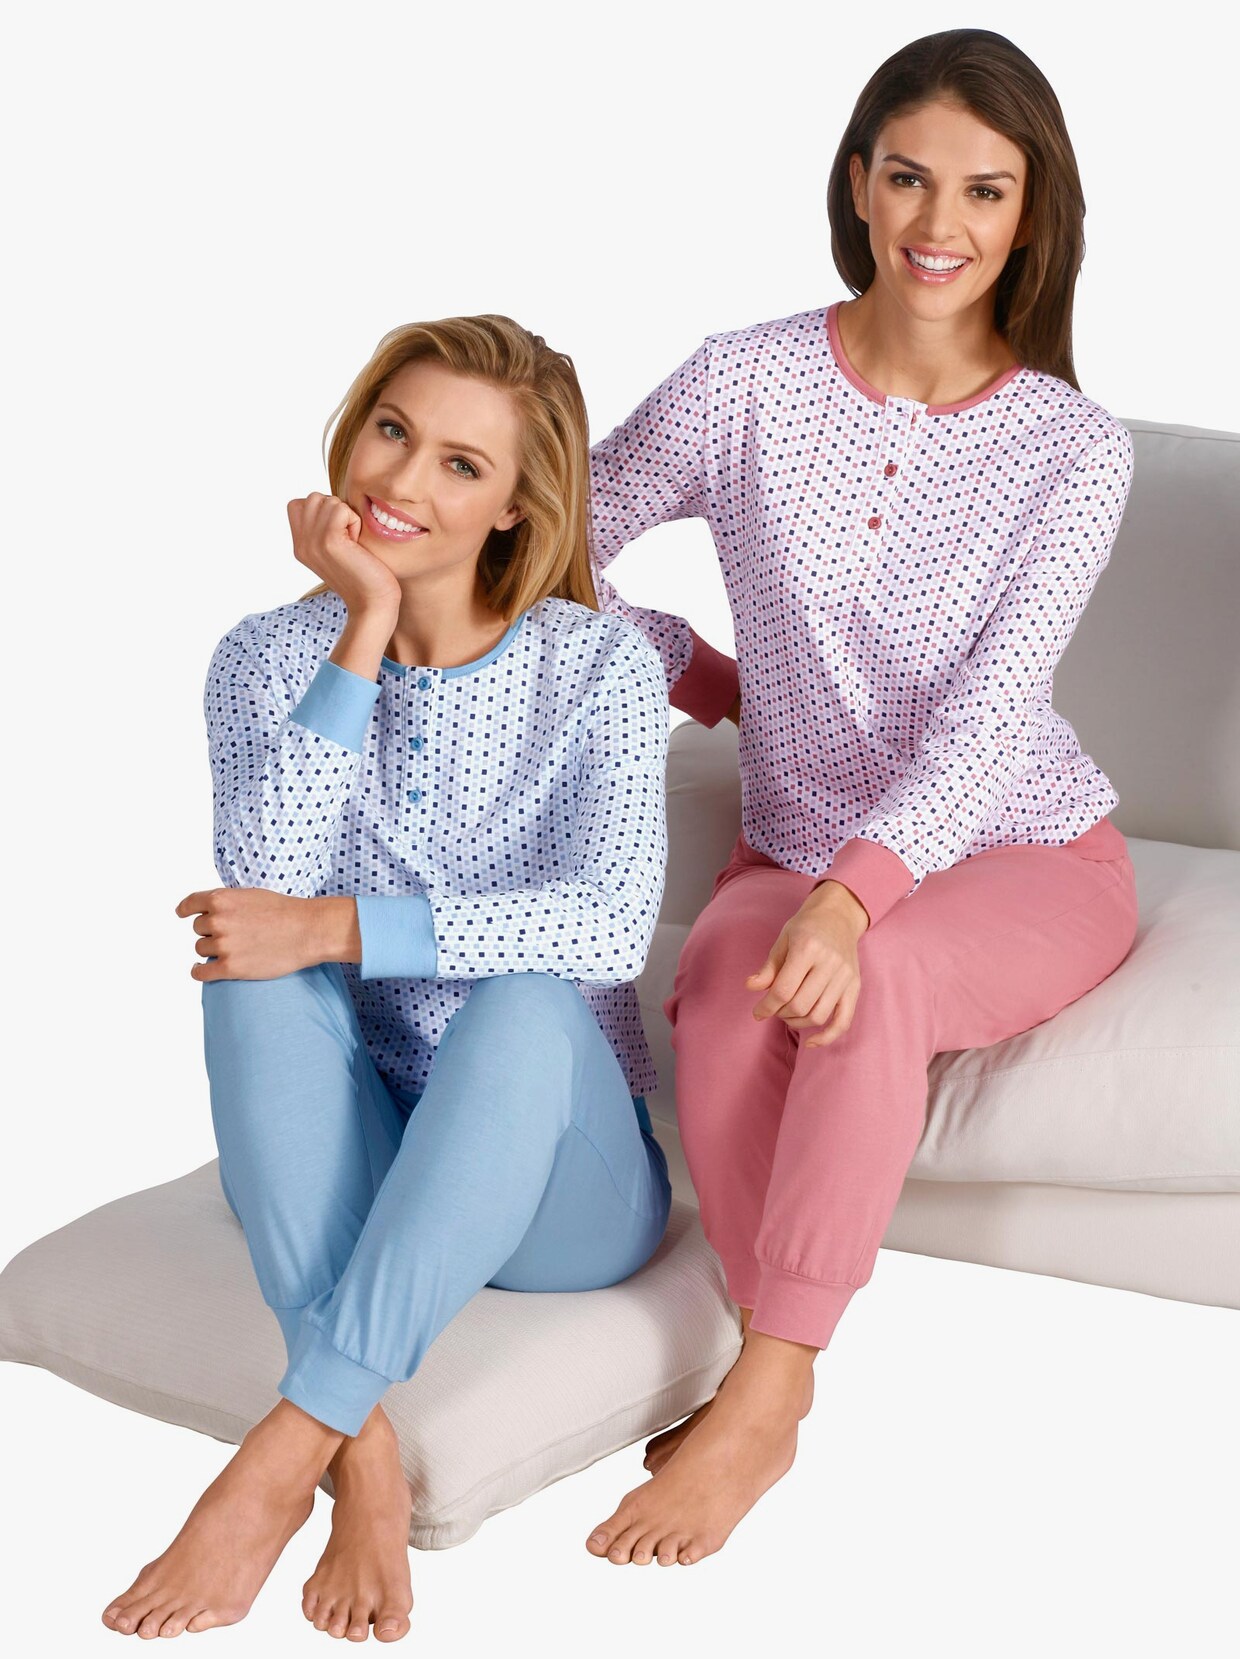 wäschepur Pyjamas - blekblå + ljung